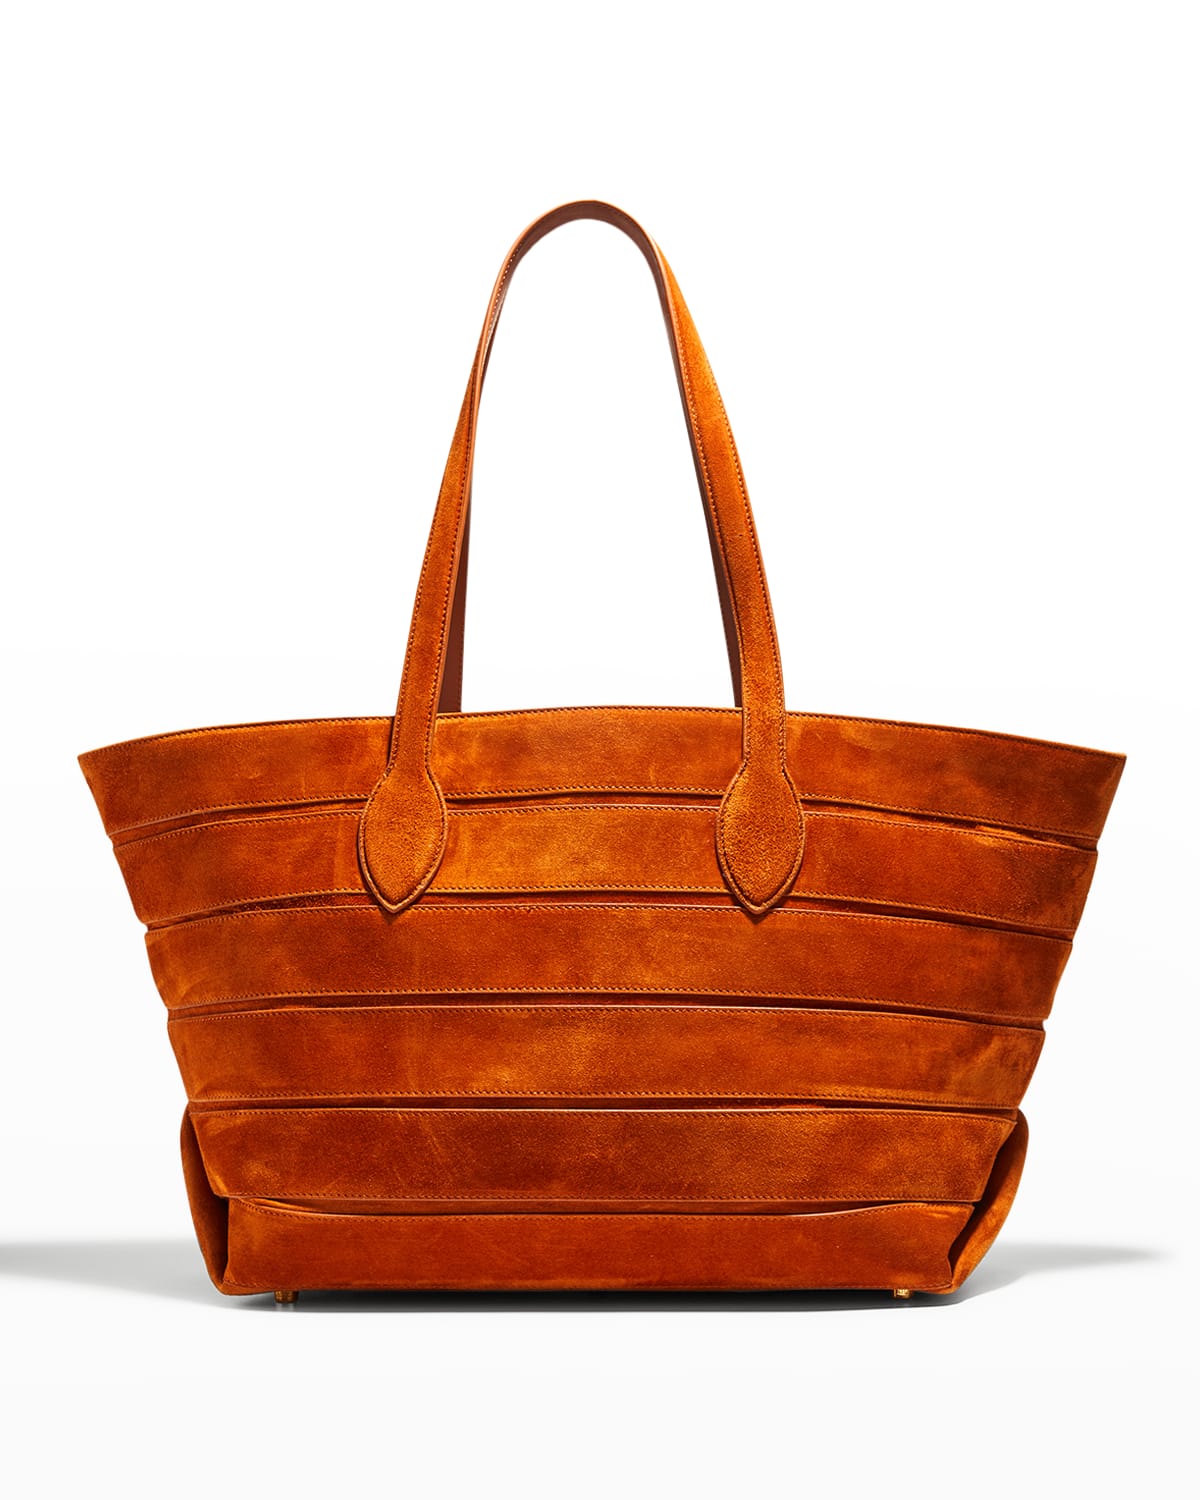 New Women Handbag Faux Leather Tote Bag Purse w/ Emblem Metal Hinge Handle 